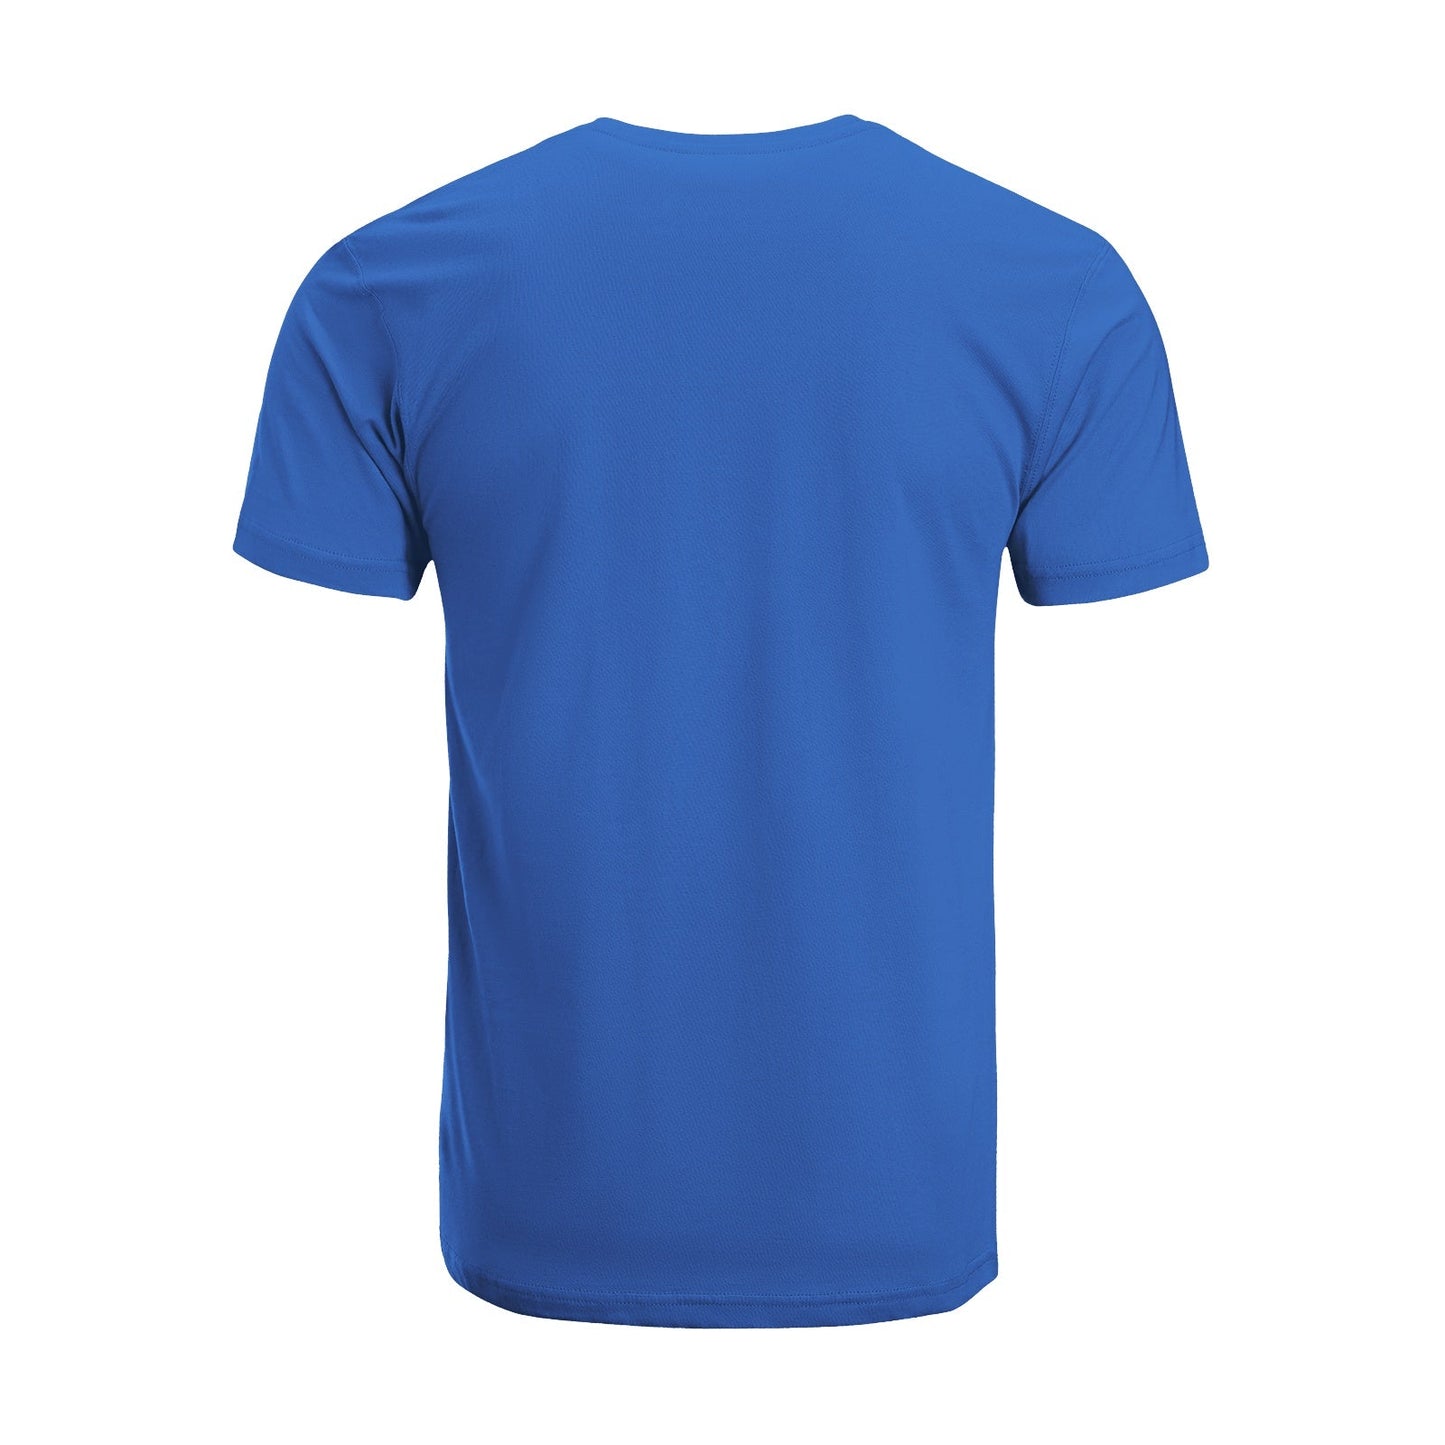 Unisex Short Sleeve Crew Neck Cotton Jersey T-Shirt MOM 25